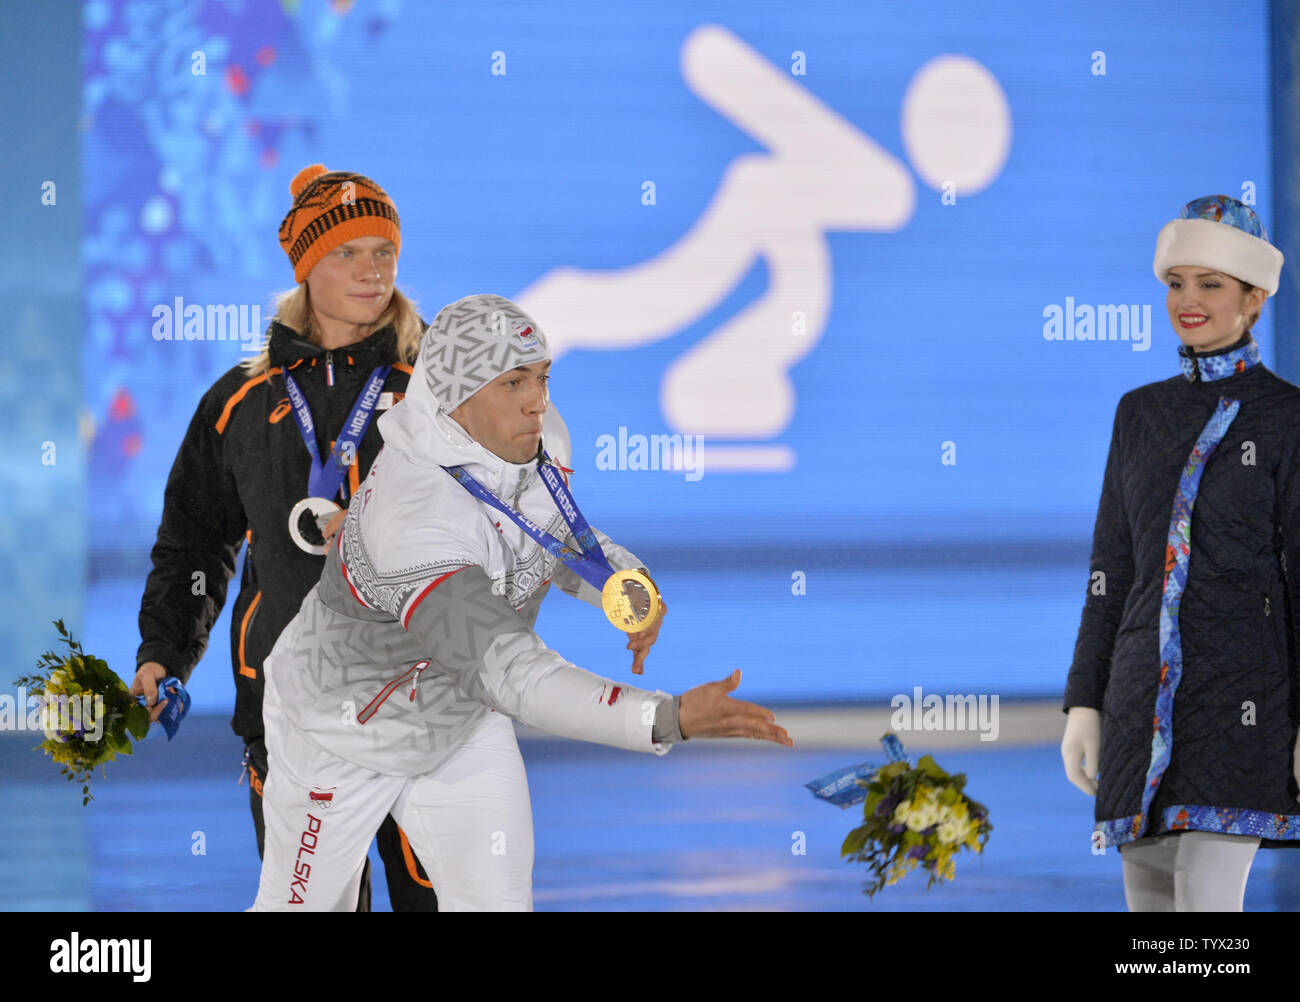 Eisschnelllauf Olympia 1.OS 2014 Foto signiert POL Zbigniew BRODKA 